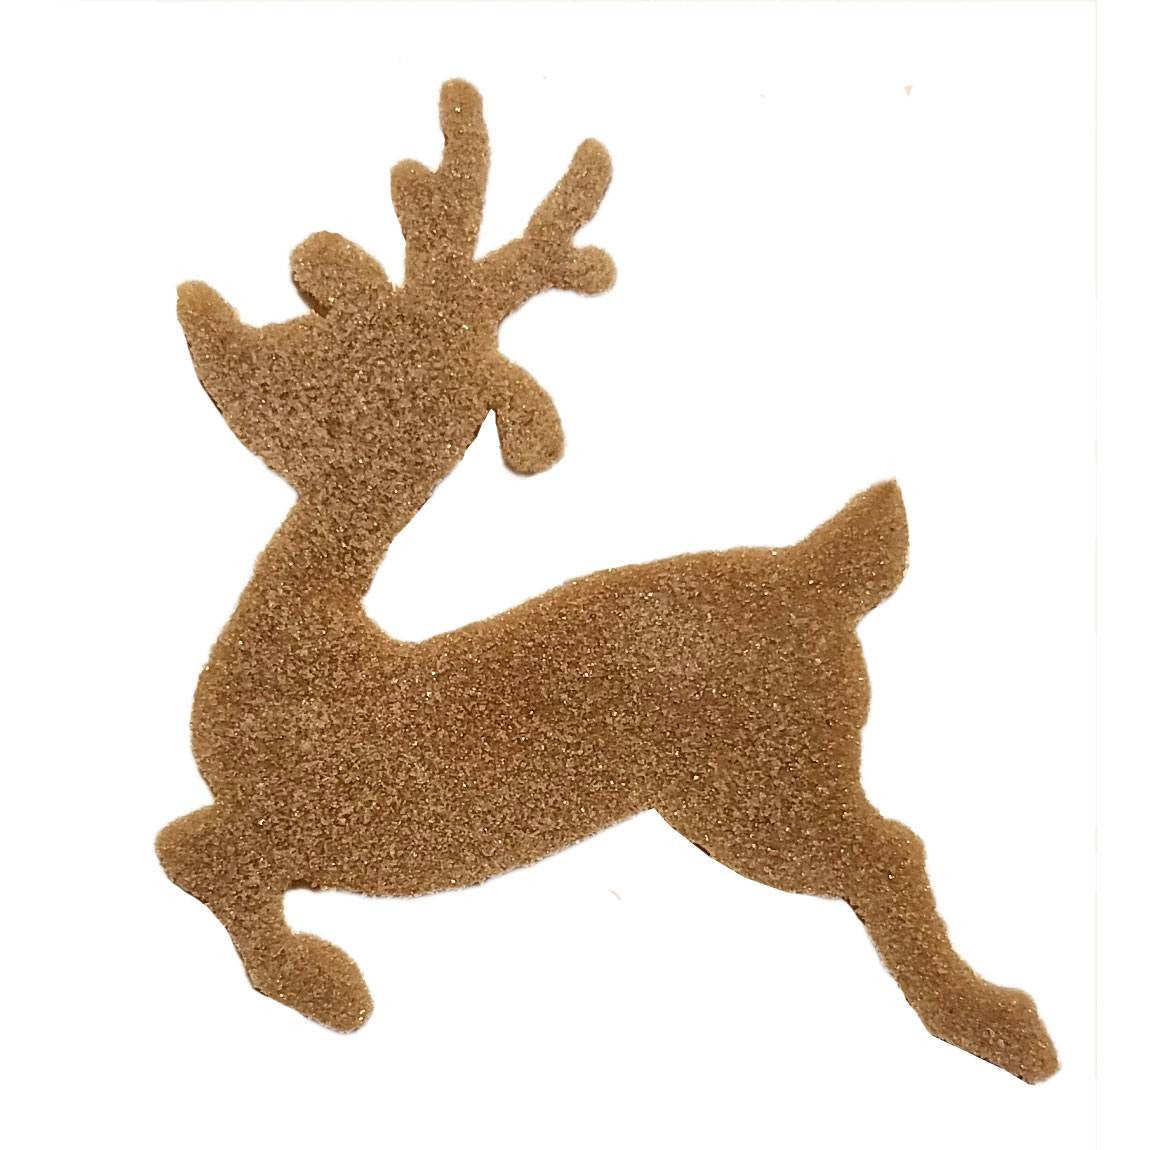 COE96 Precut Glass Reindeer Rudolph Kiln Fired to a Chocolate Brown